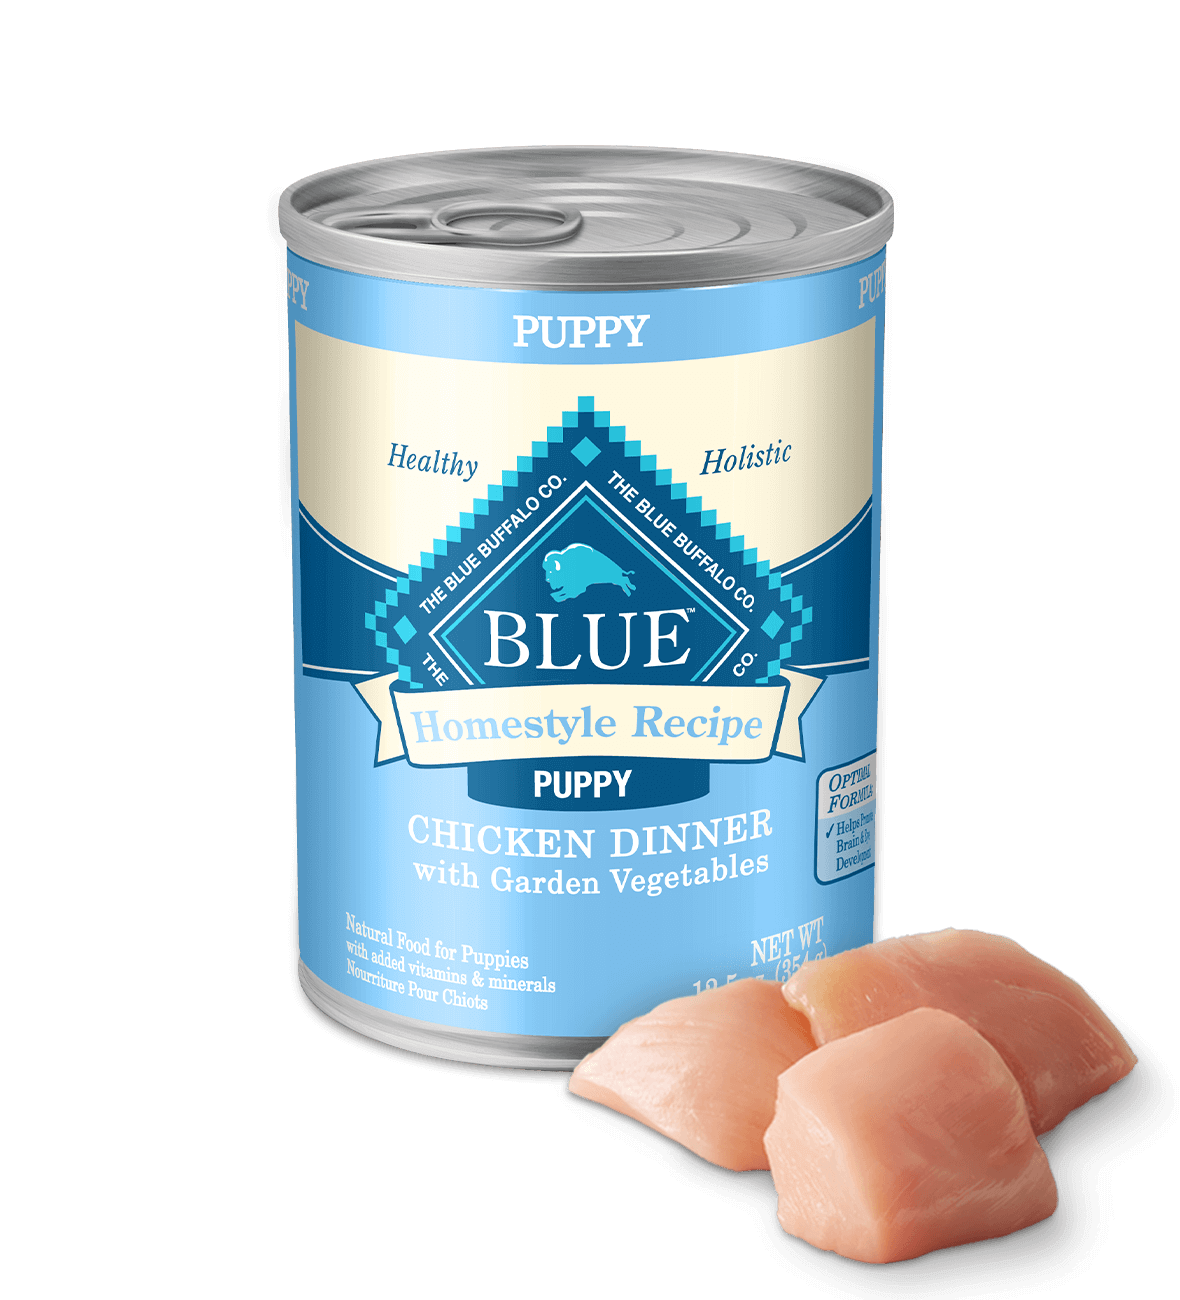 Blue Buffalo Homestyle - Best Wet Puppy Food